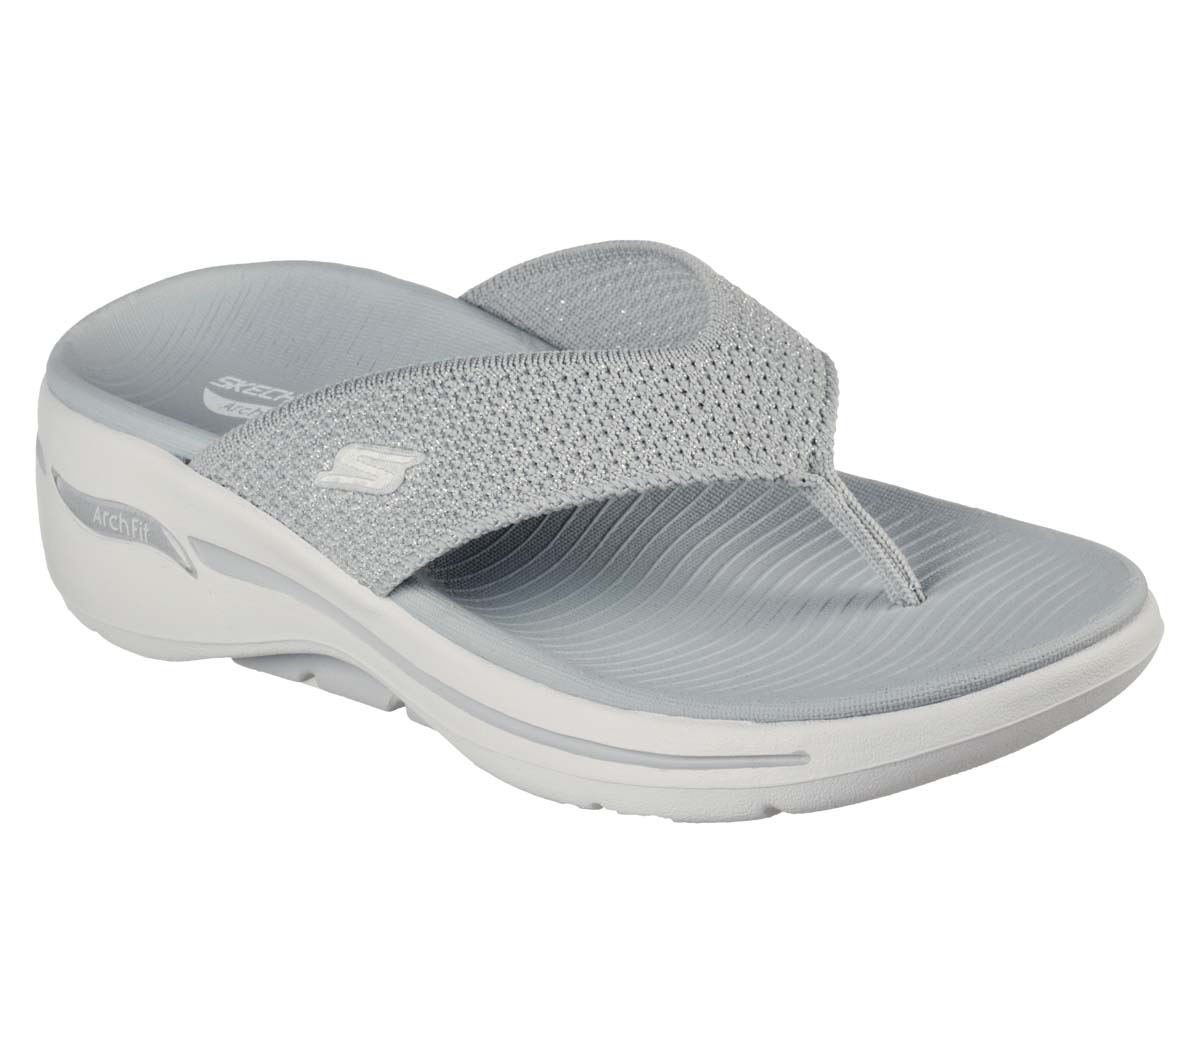 Skechers Arch Fit Go Walk Toe Post 140269 GRY Grey Toe Post Sandals